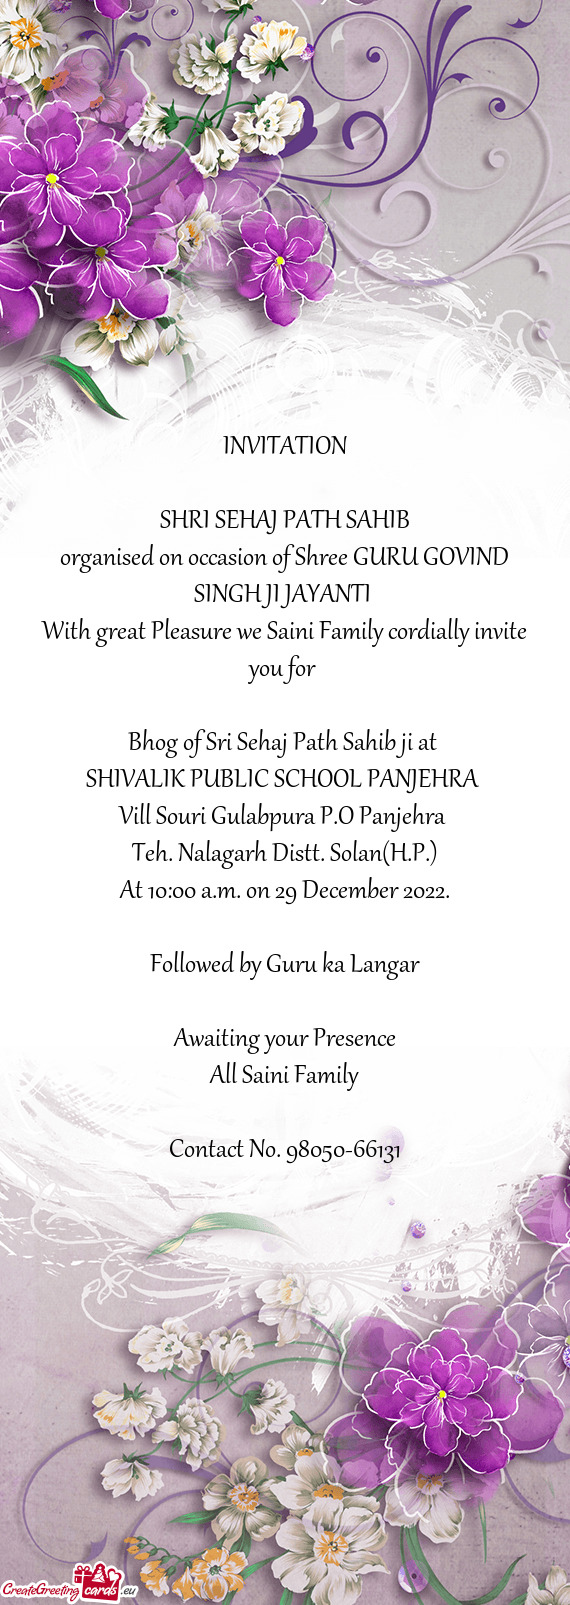 With great Pleasure we Saini Family cordially invite